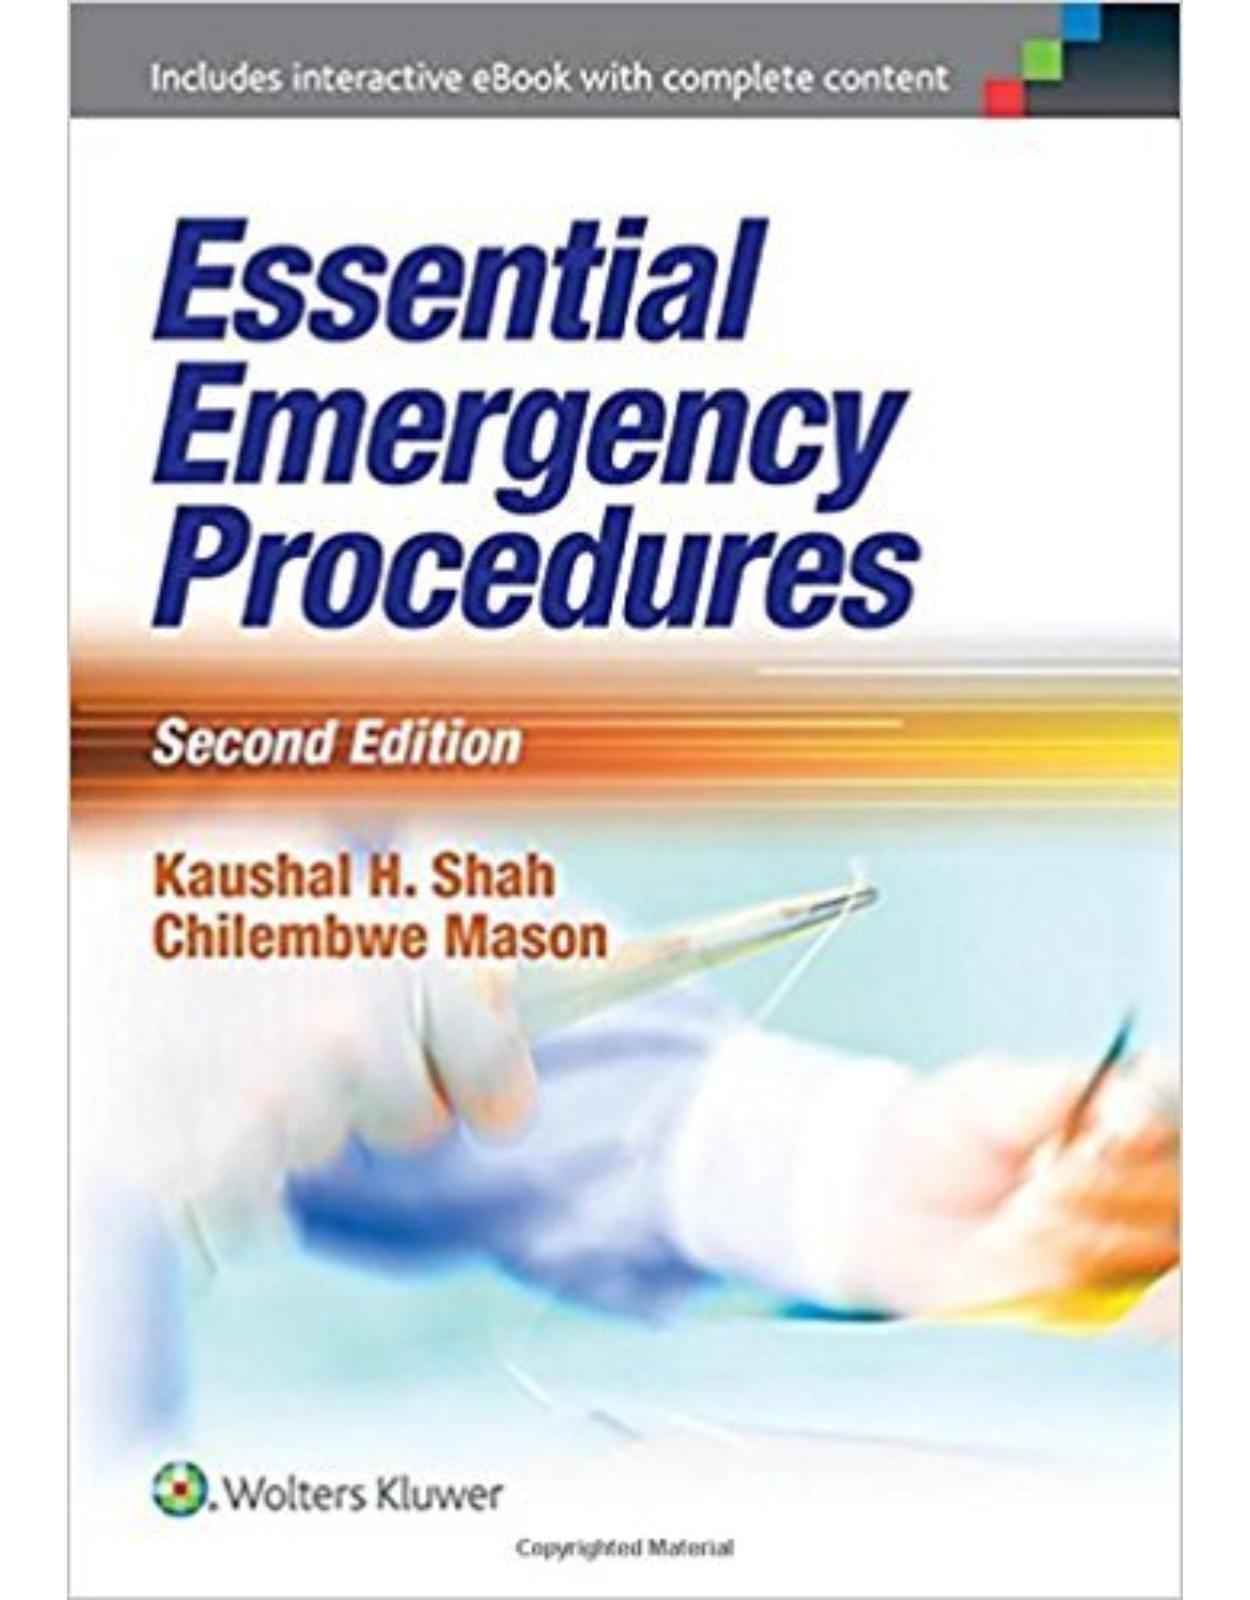 Essential Emergency Procedures 2nd Edition